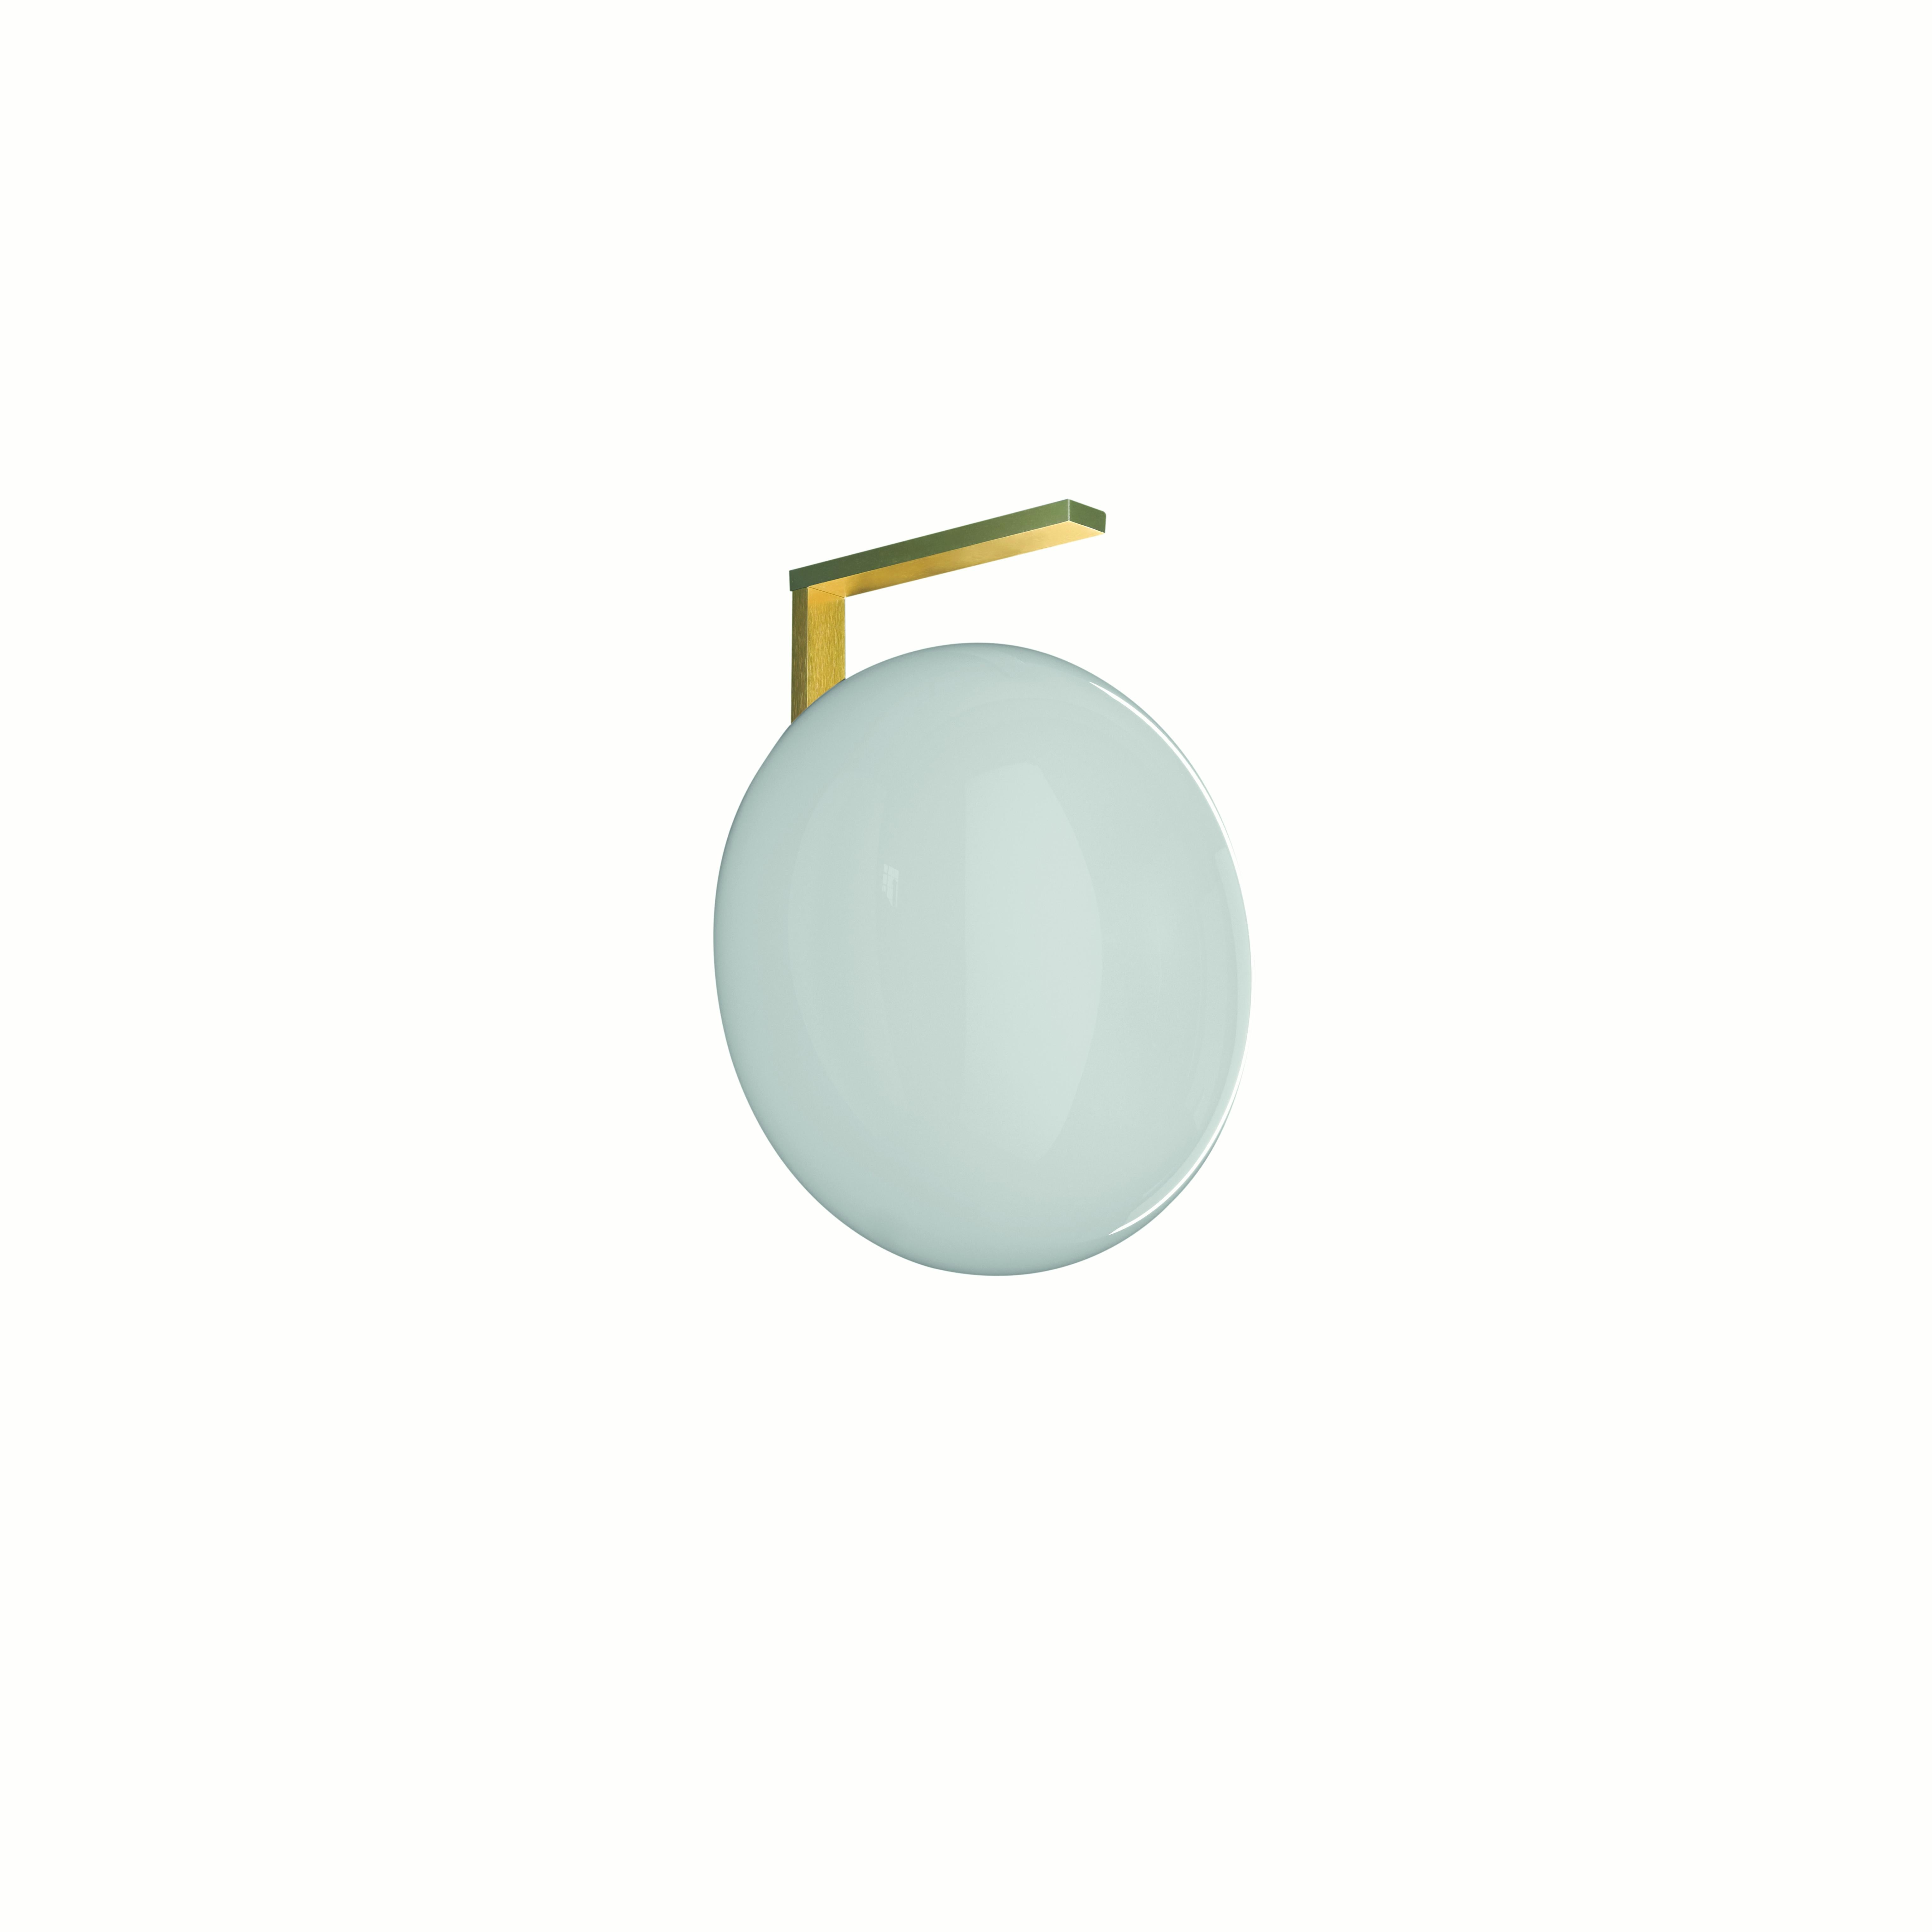 Italian Mariana Pellegrino Soto Wall Lamp 'Alba' Opaline Glass and Brass by Oluce For Sale